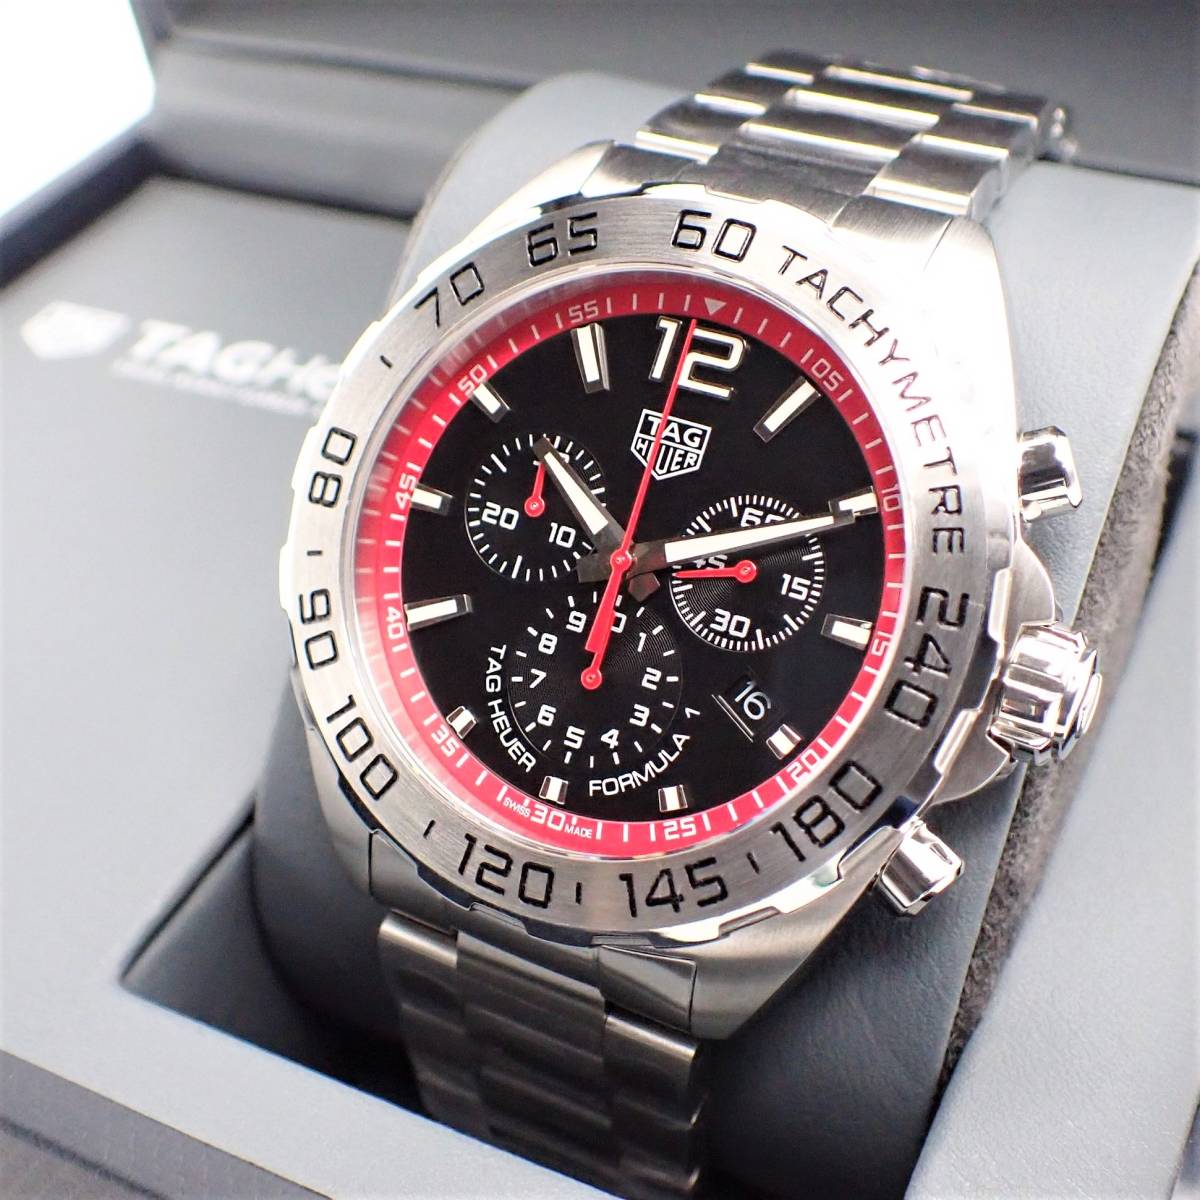 Tag Heuer Formula 1 Chronograph Black Dial Silver Steel Strap Watch for Men - CAZ101Y.BA0842